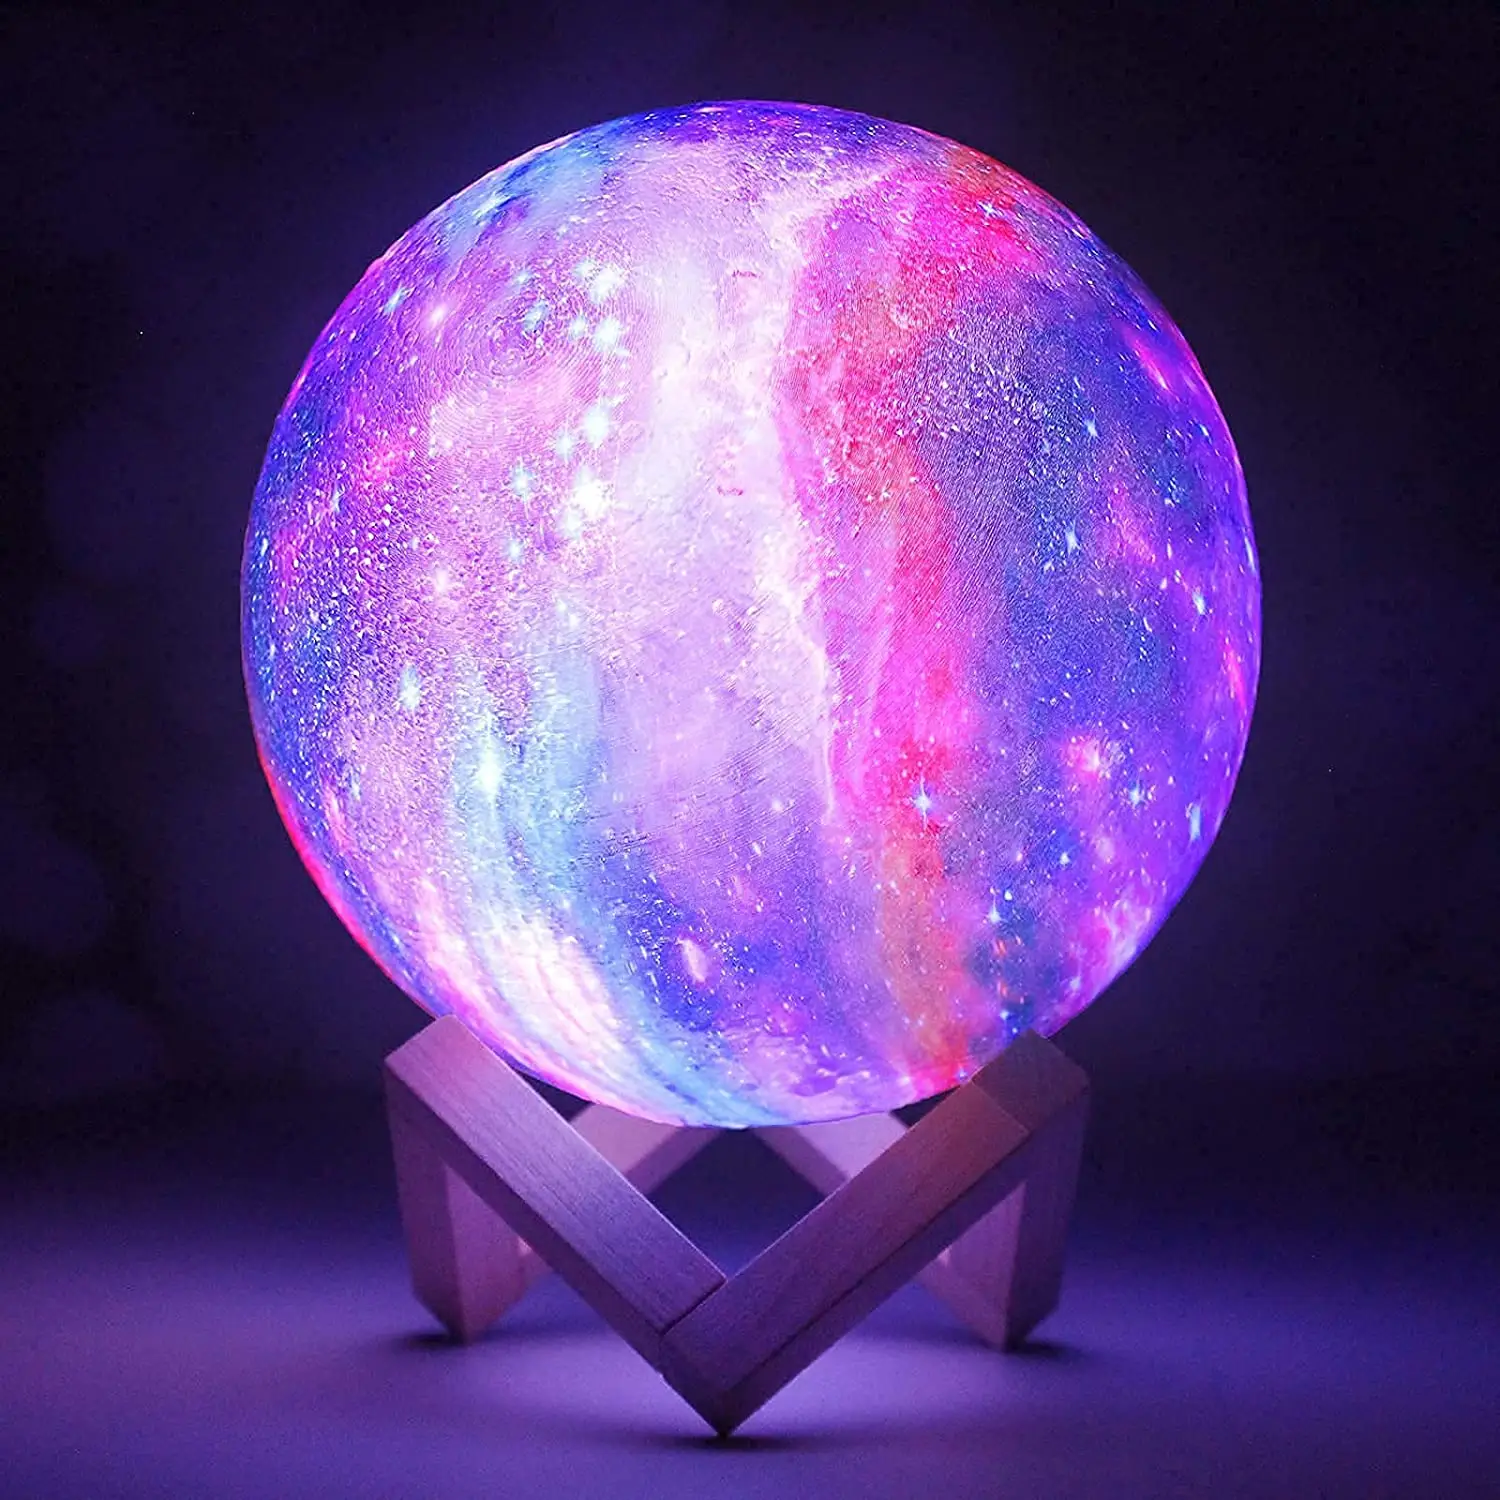 Drop Ship Galaxy Raum lampe 16 Farben Lava Lampe Mondlicht Mond Galaxie Nachtlicht Mond Galaxie Ball 3D gedruckte Mond lampe für Geschenke